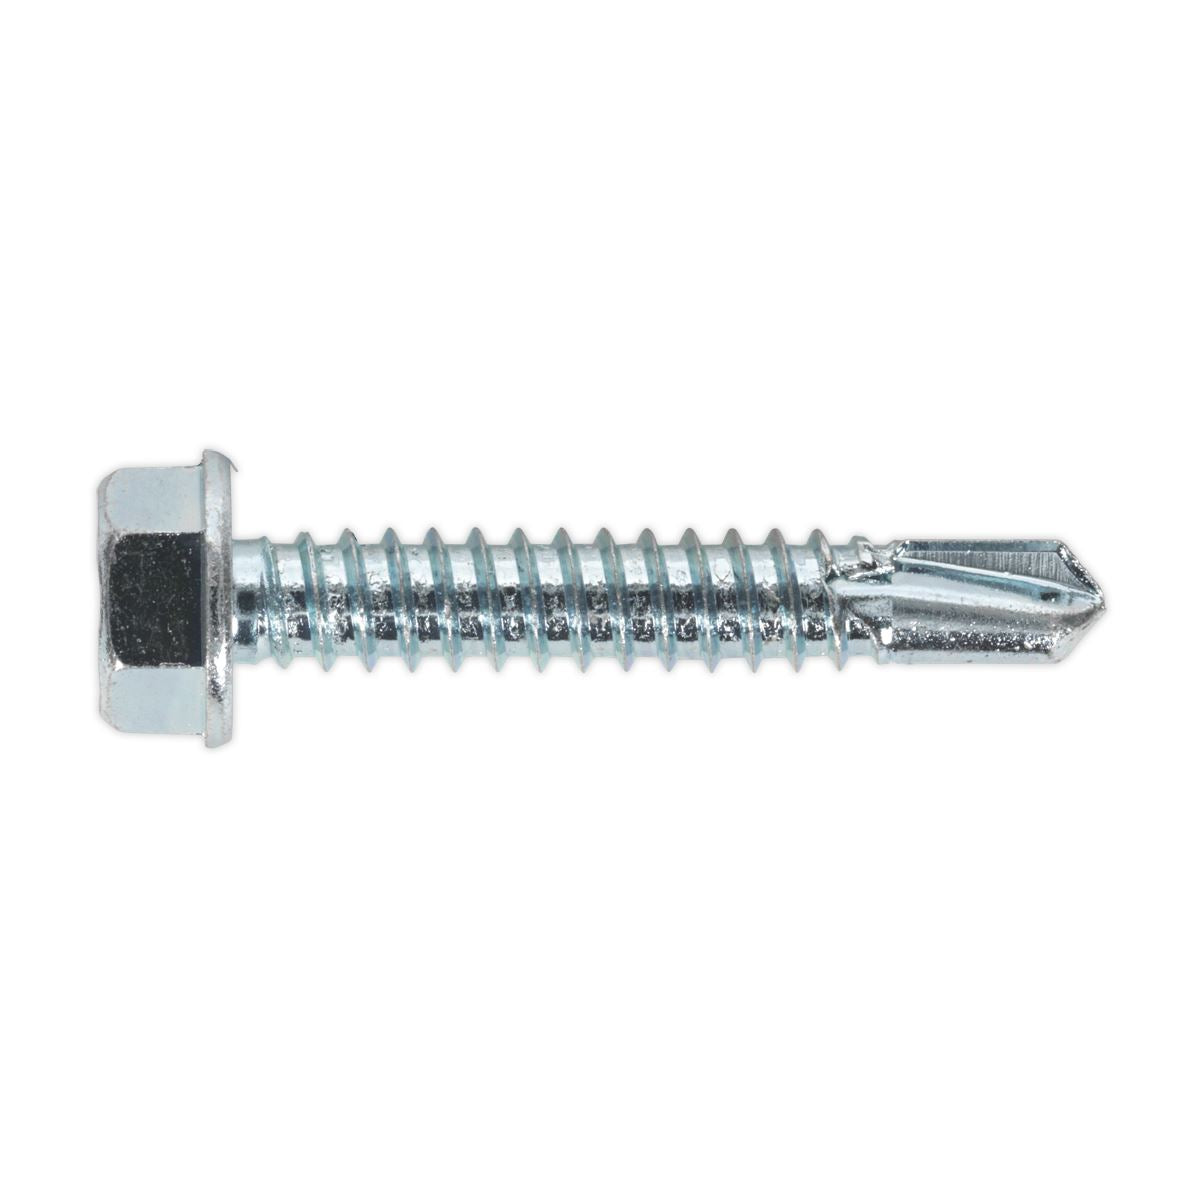 Sealey Self-Drilling Screw 6.3 x 38mm Hex Head Zinc Pack of 100